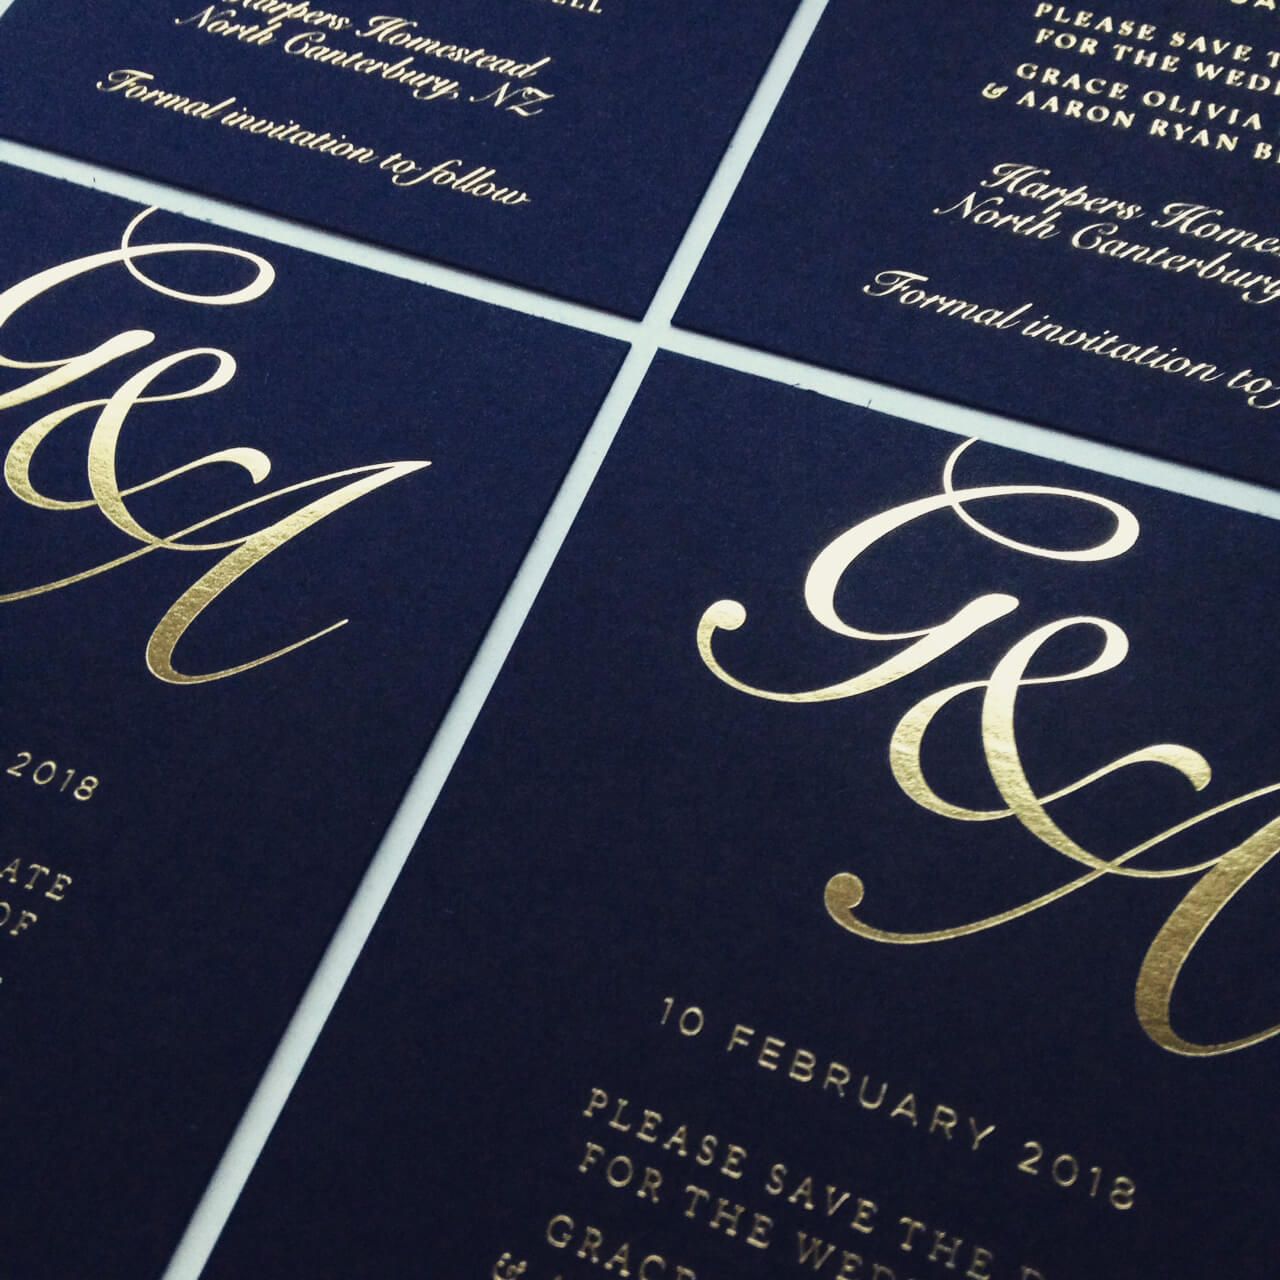 Save the date wedding invitations designed by Vanilla Hayes creative graphic design  studio in Blenheim, Marlborough, New Zealand